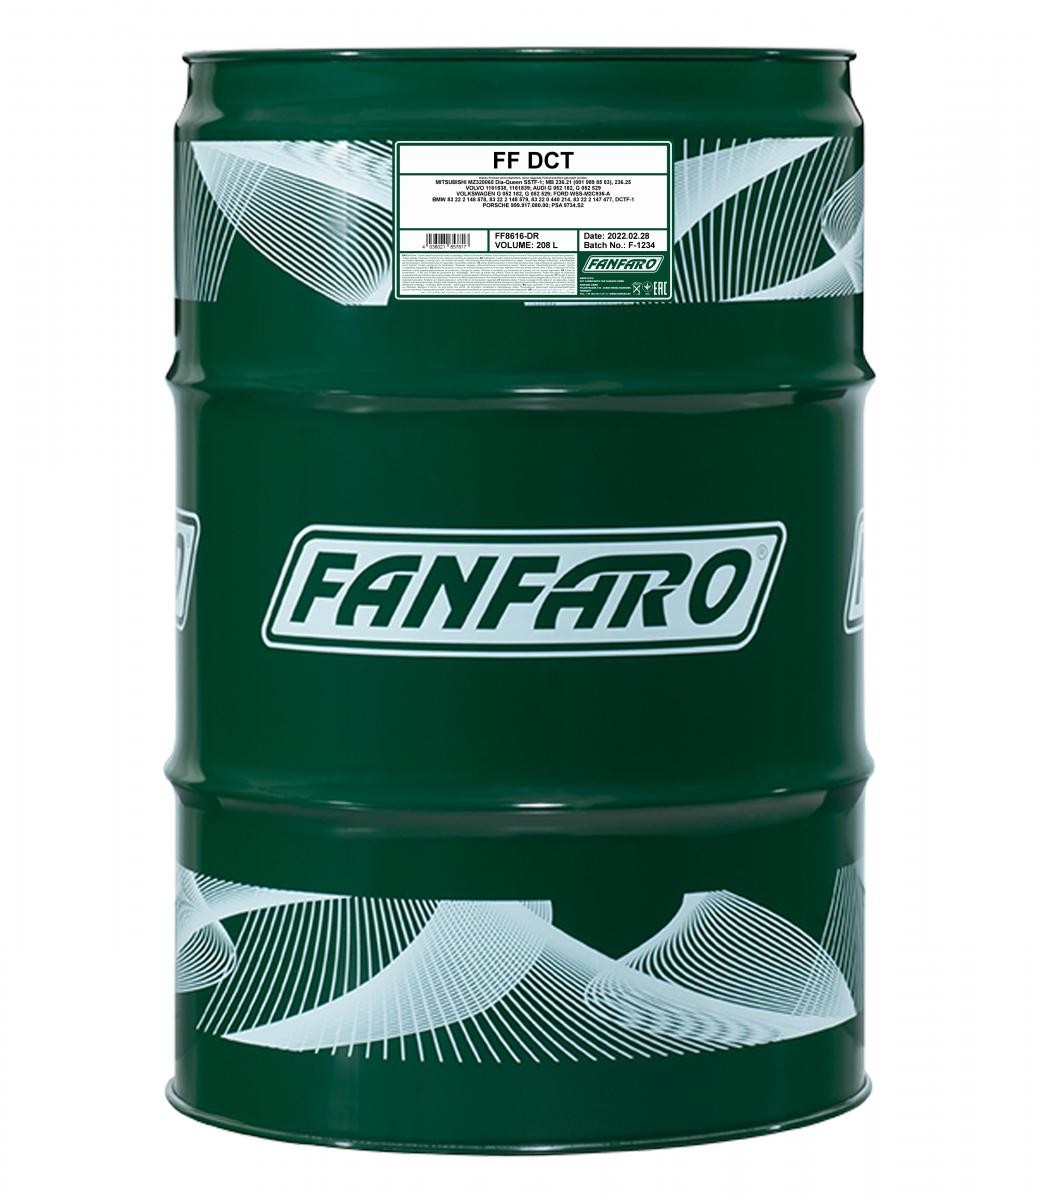 Great value for money - FANFARO Manual Transmission Oil FF8616-DR